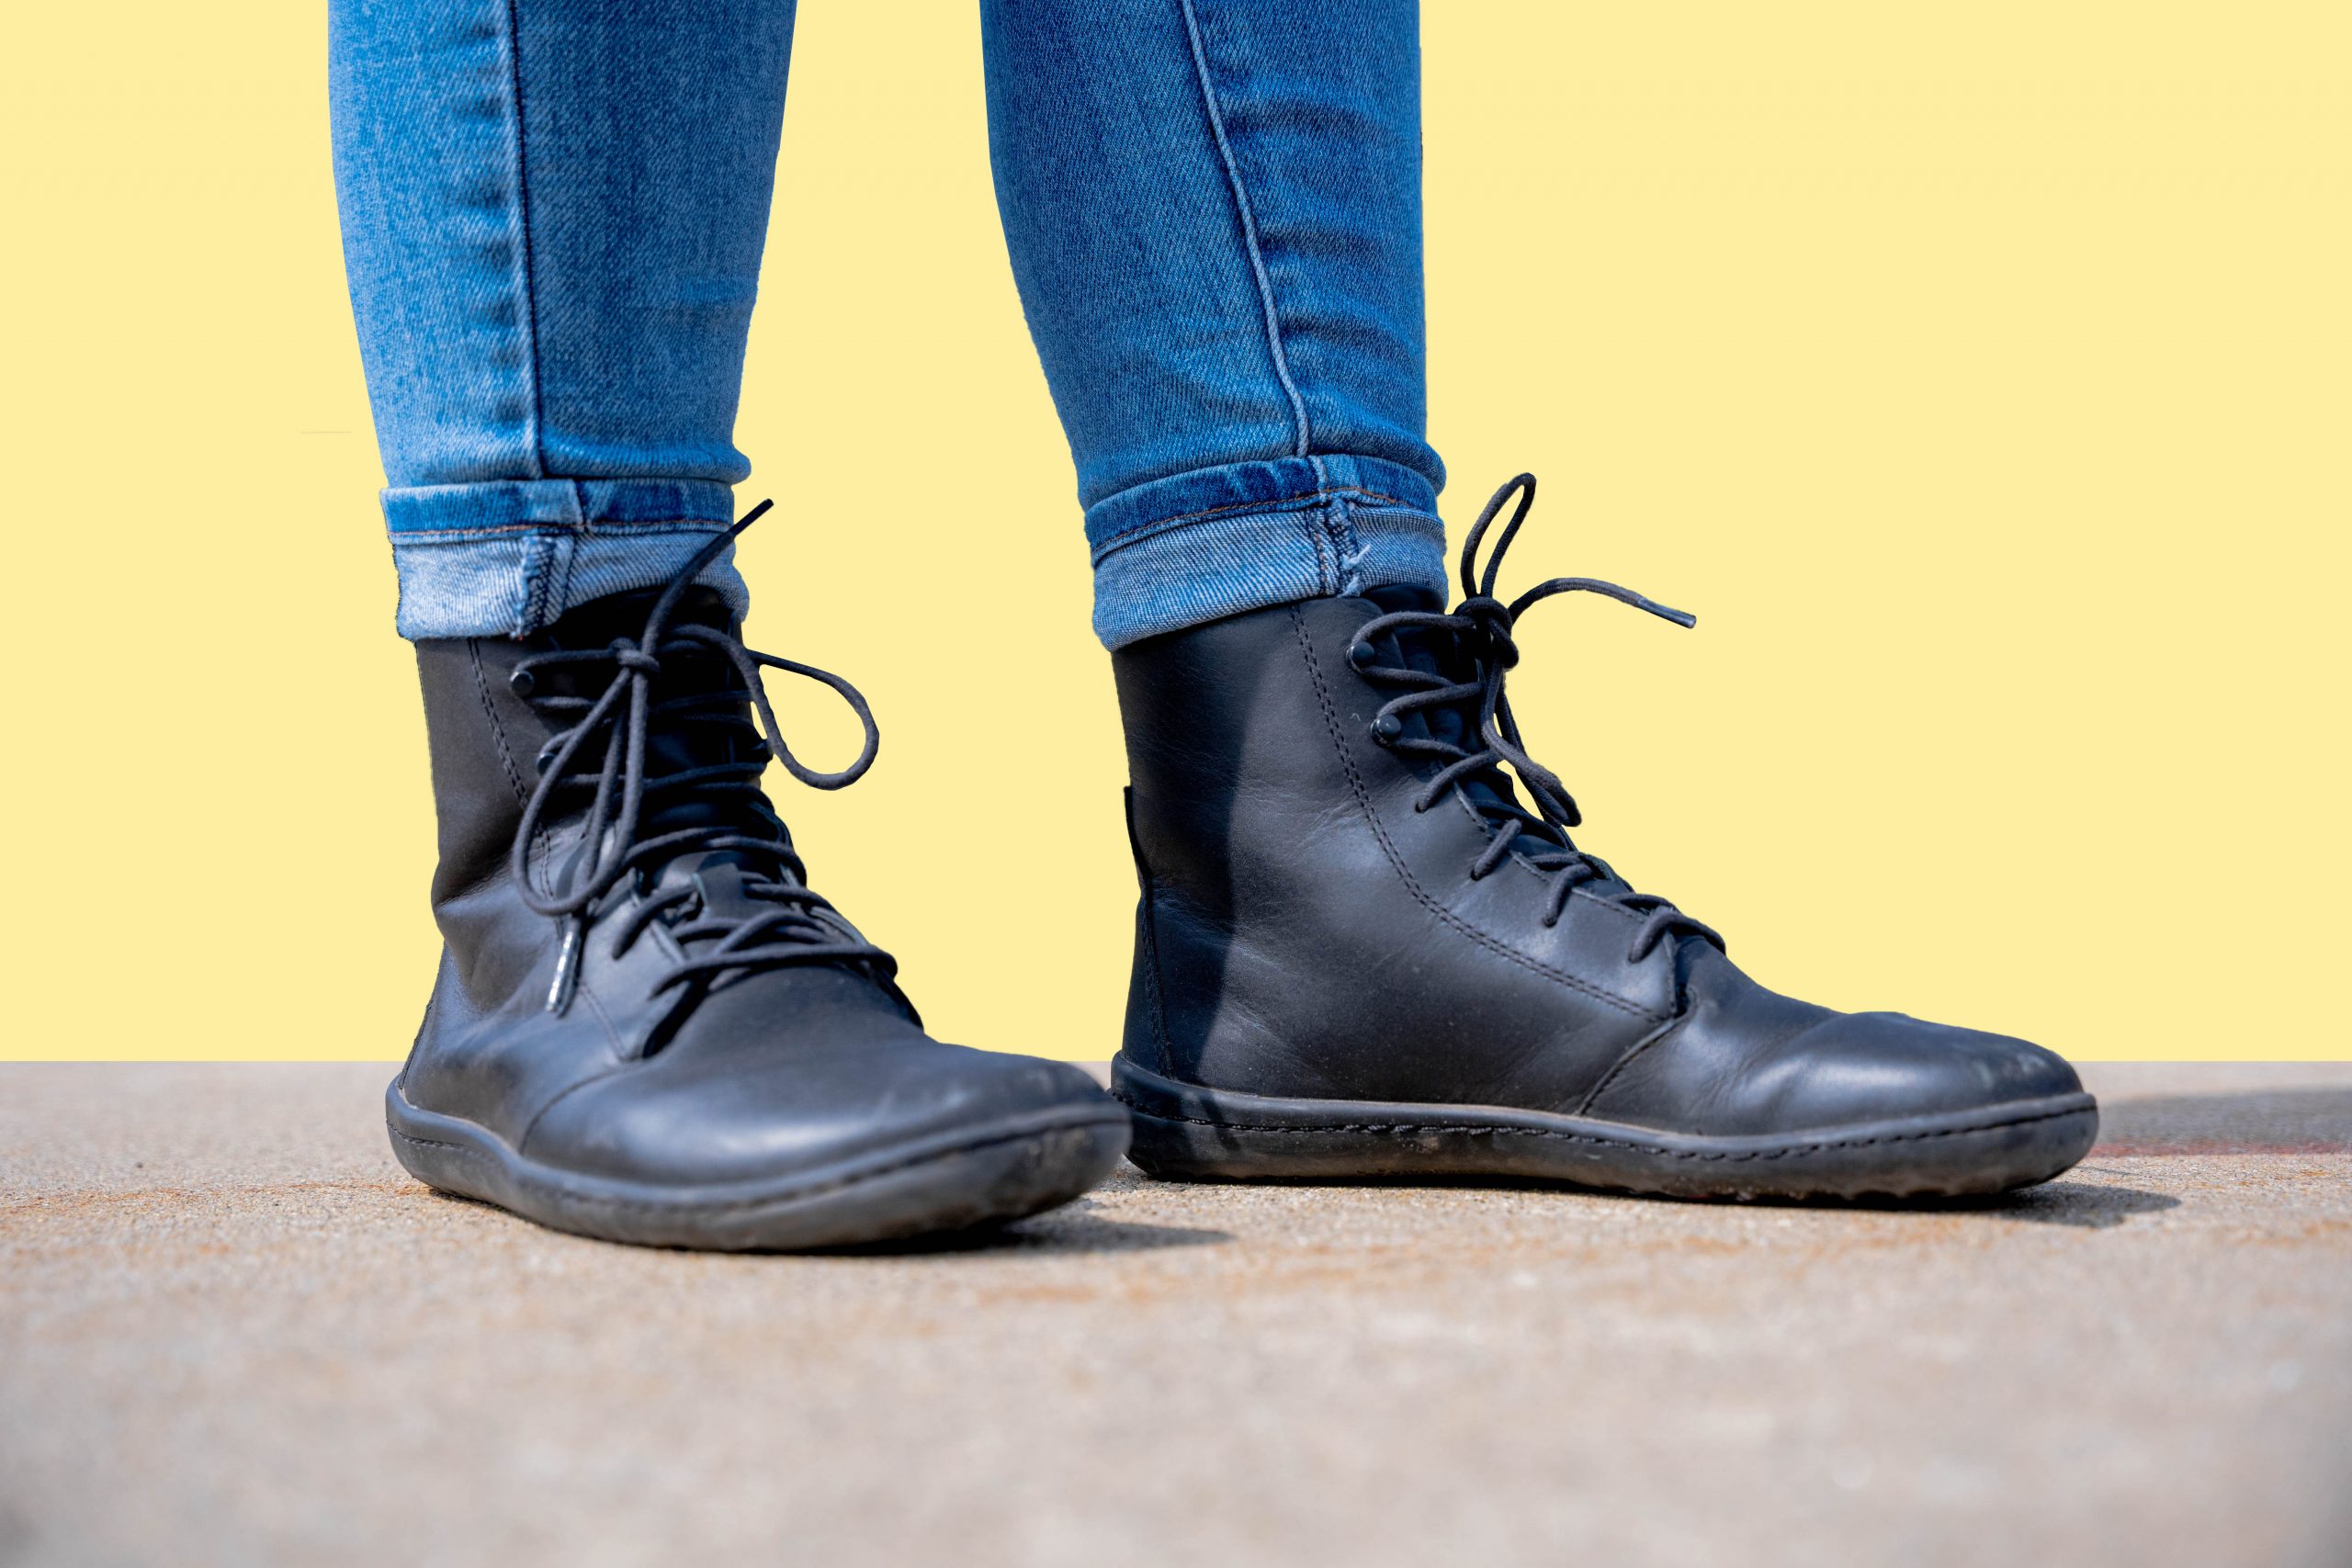 European comfort shoes + FREE SHIPPING | Zappos.com